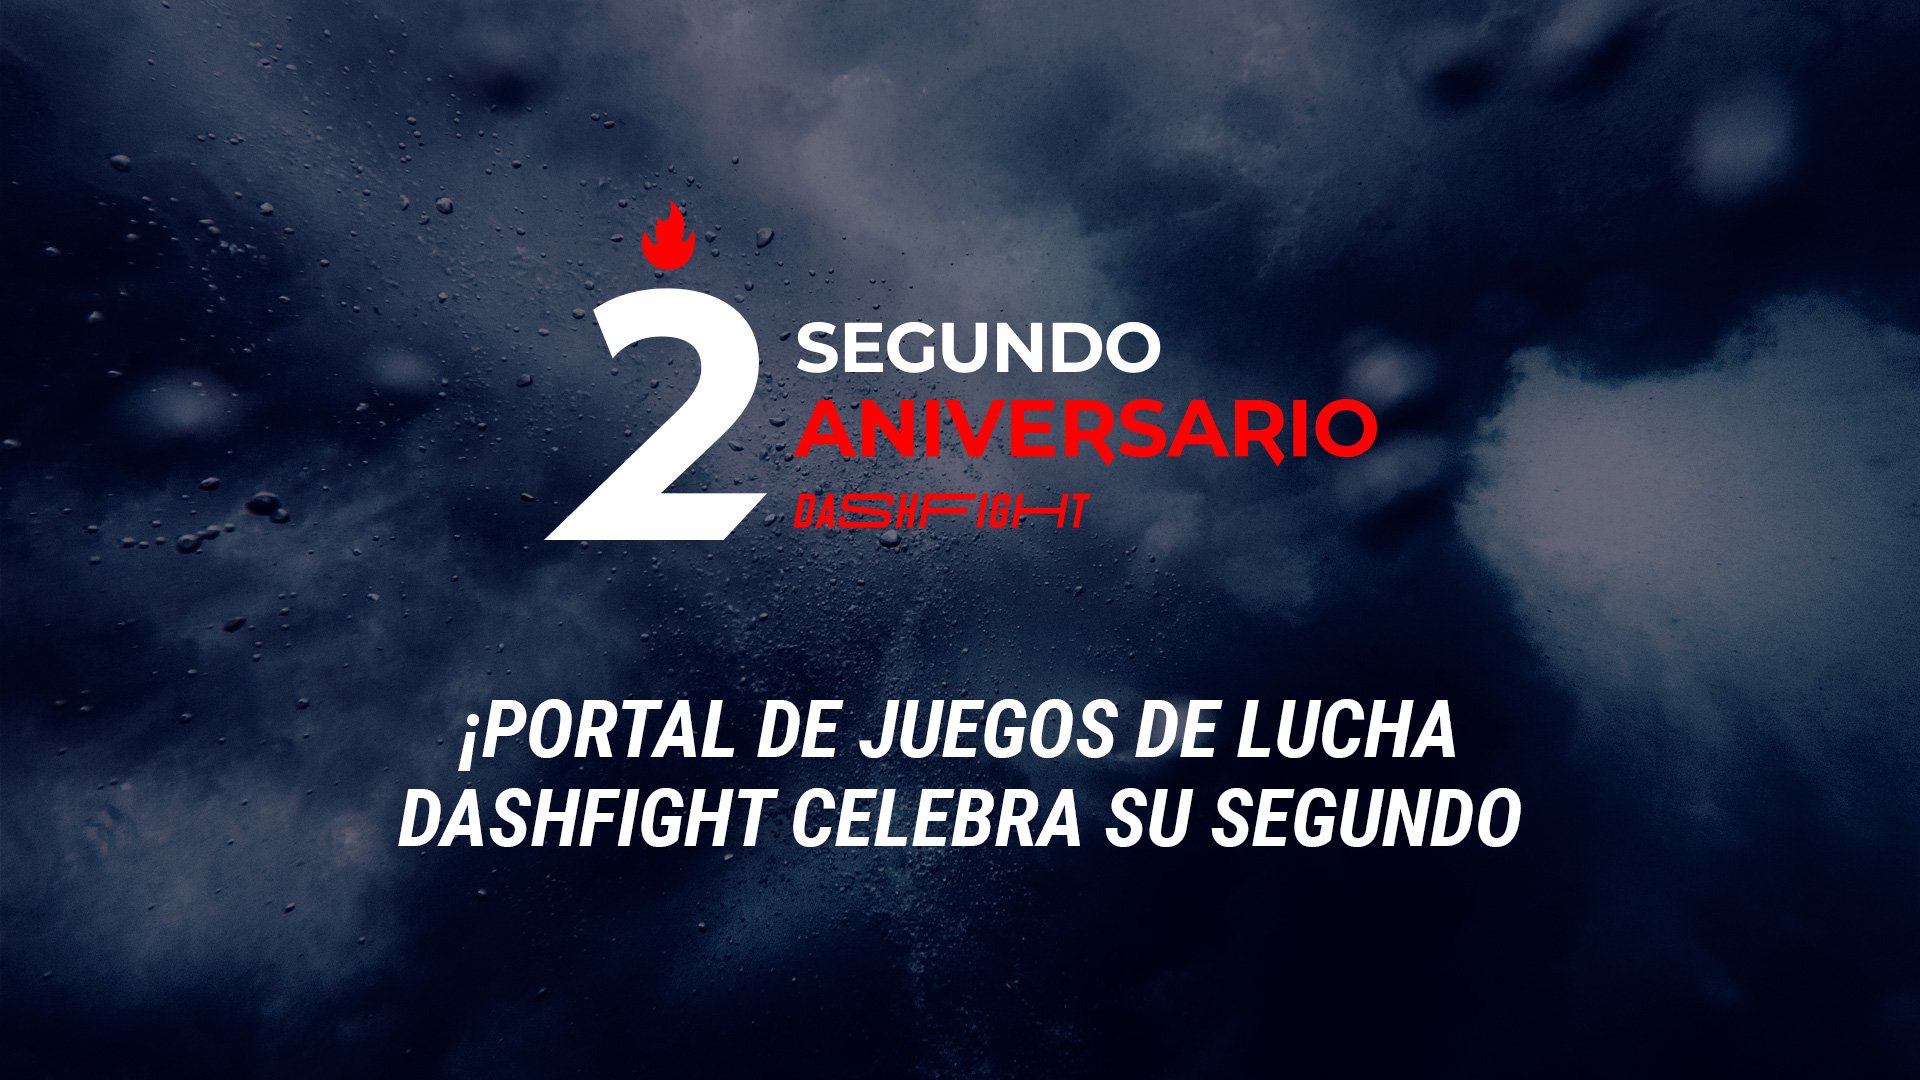 ¡Portal de juegos de lucha DashFight celebra su segundo aniversario! Imagen: DashFight